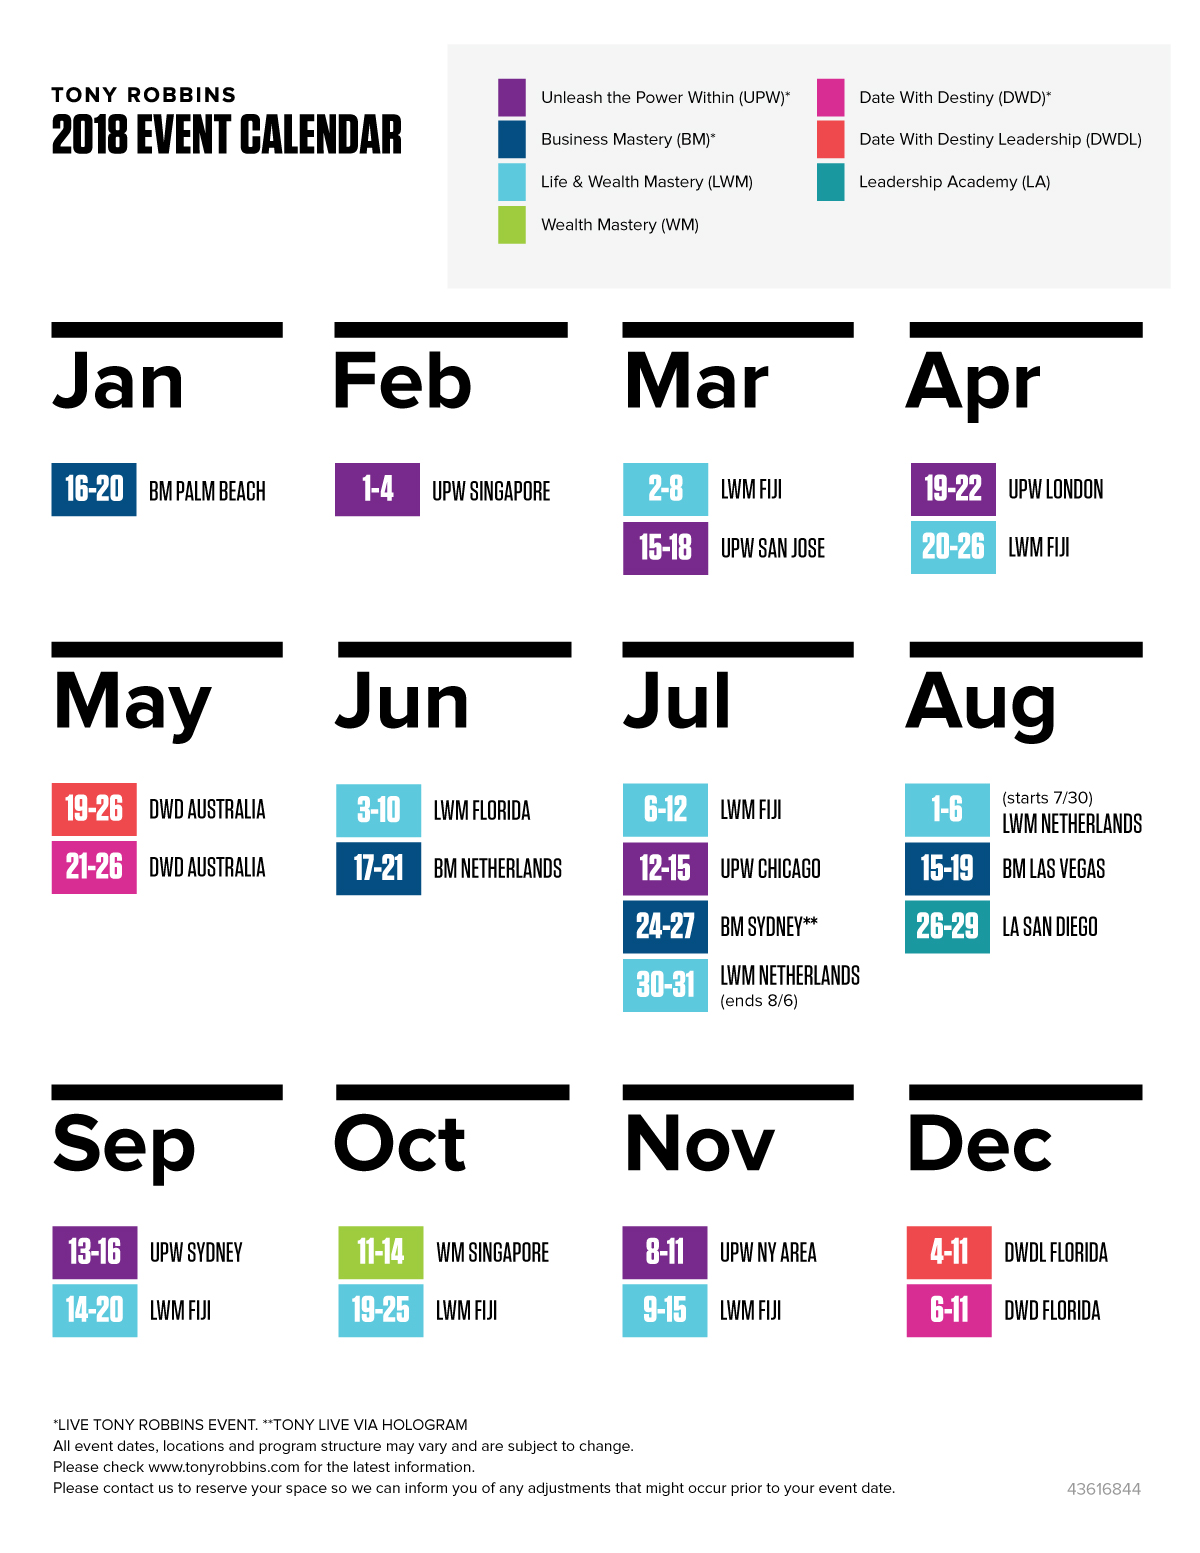 Tony Robbins' Event Calendar